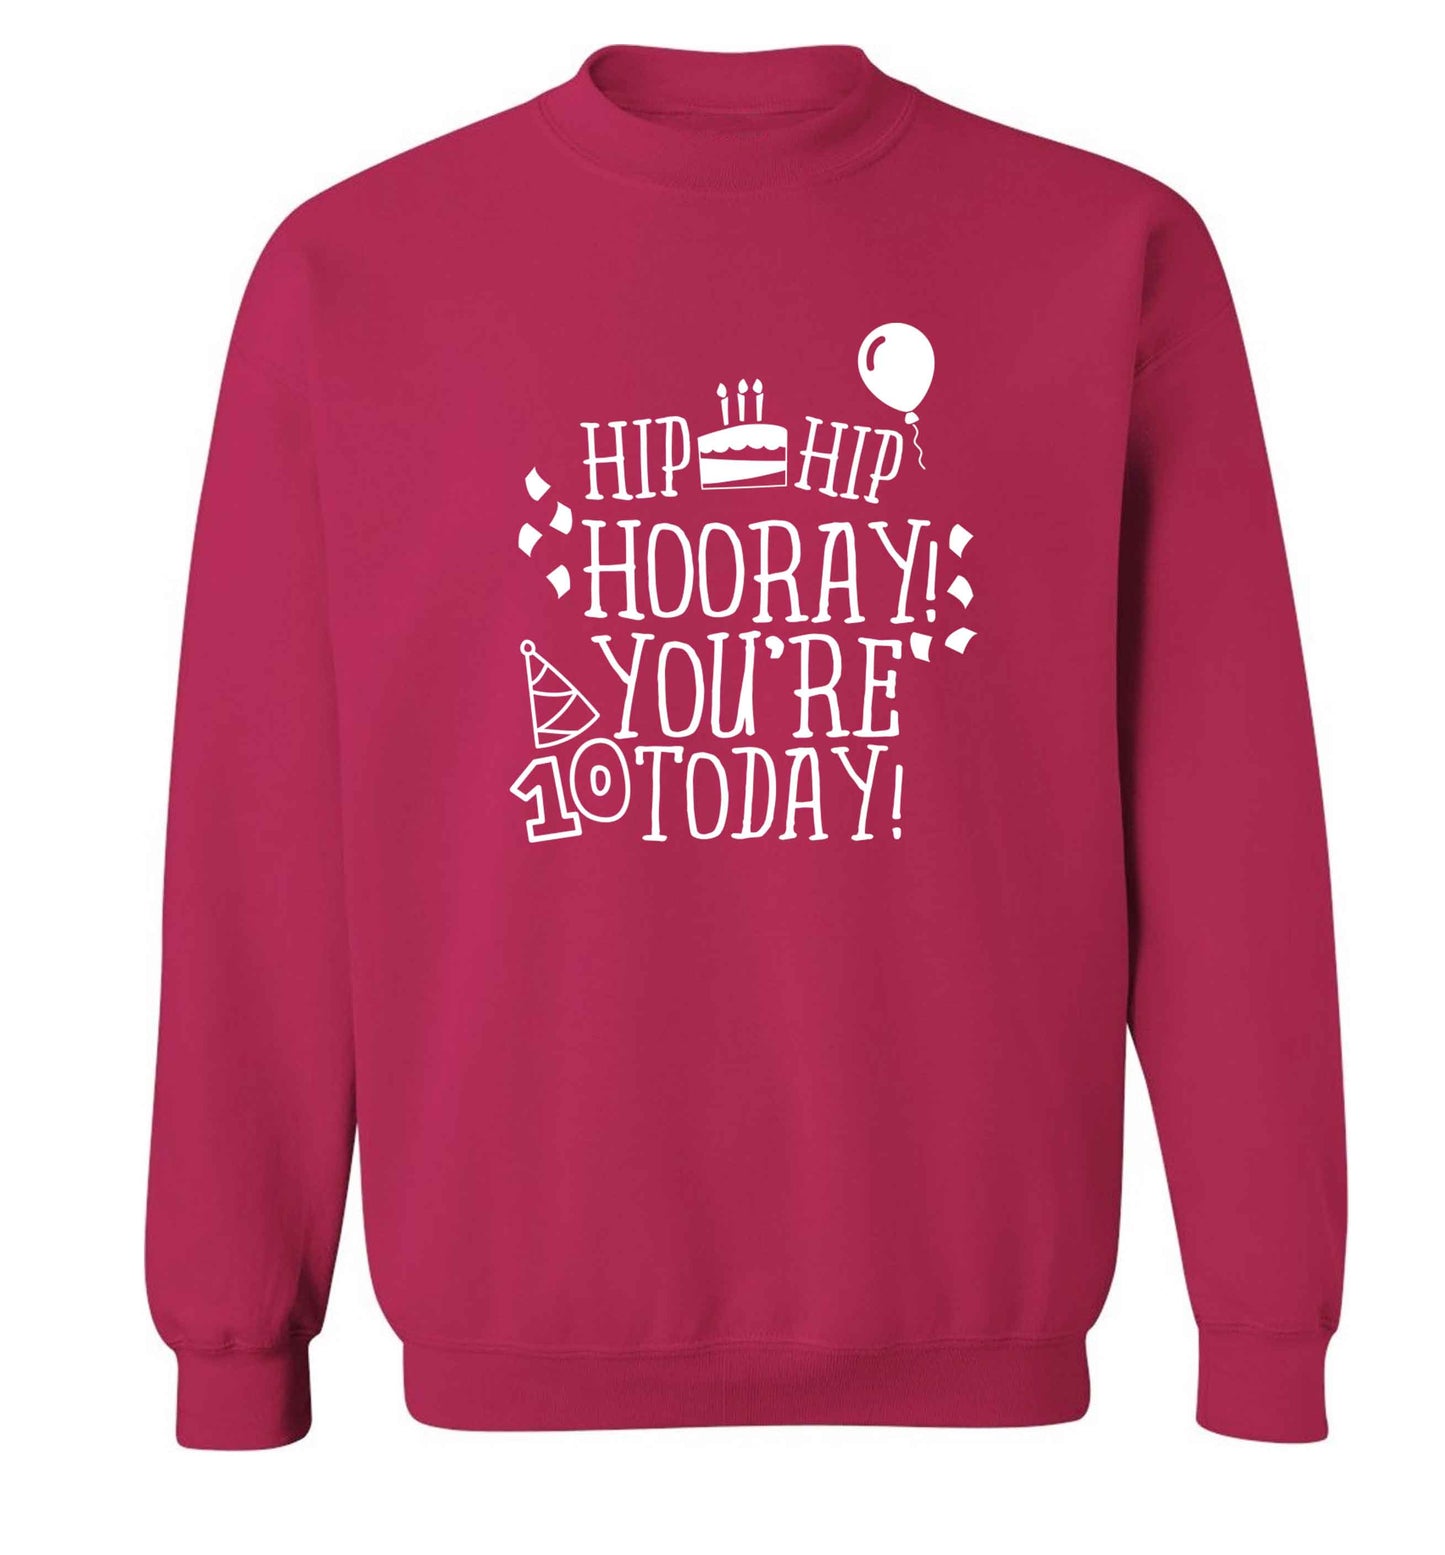 Hip hip hooray you're ten today! adult's unisex pink sweater 2XL